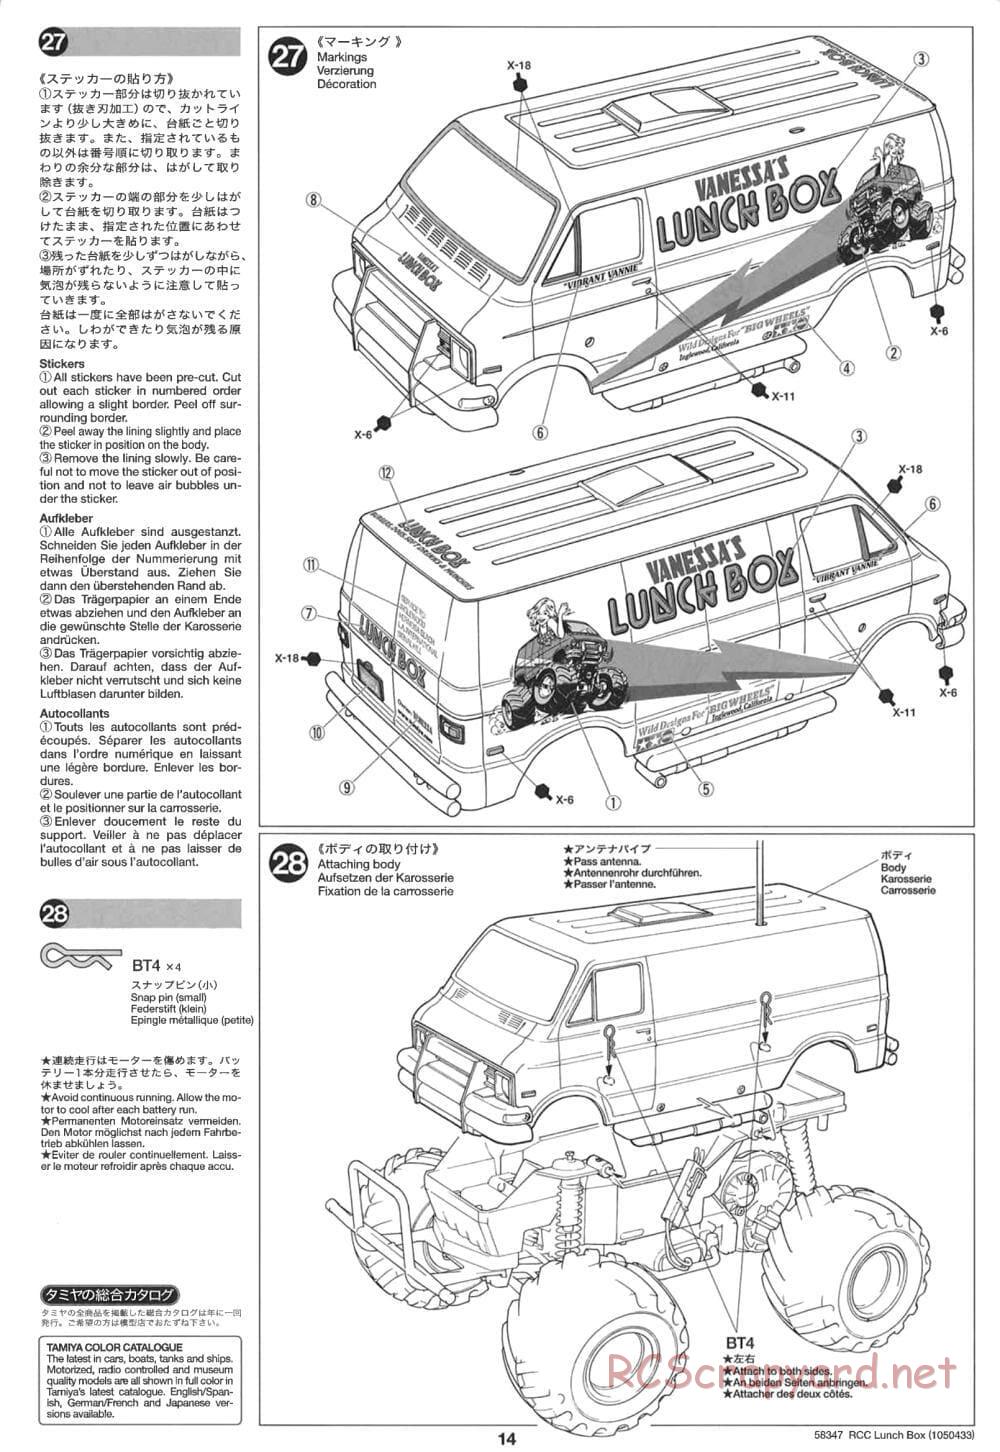 Tamiya - Vanessas Lunchbox - CW-01 Chassis - Manual - Page 14